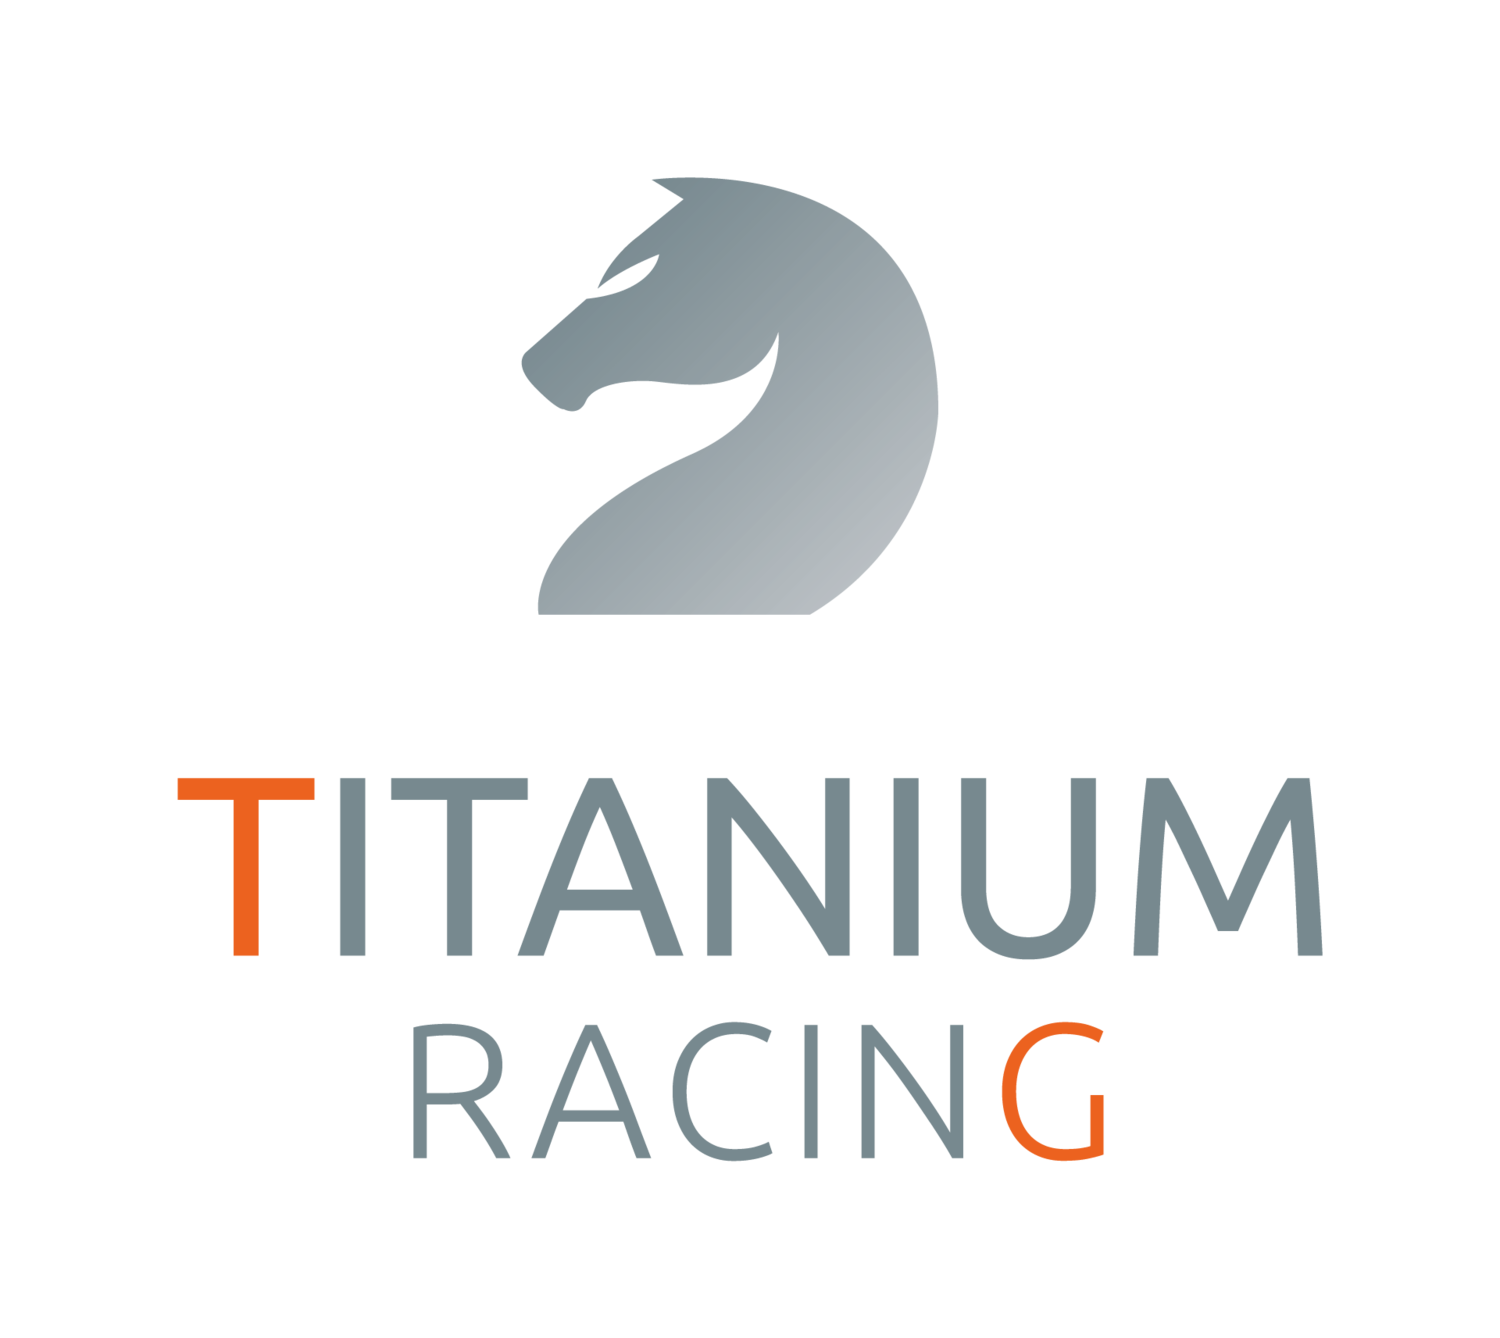 Titanium Racing logo